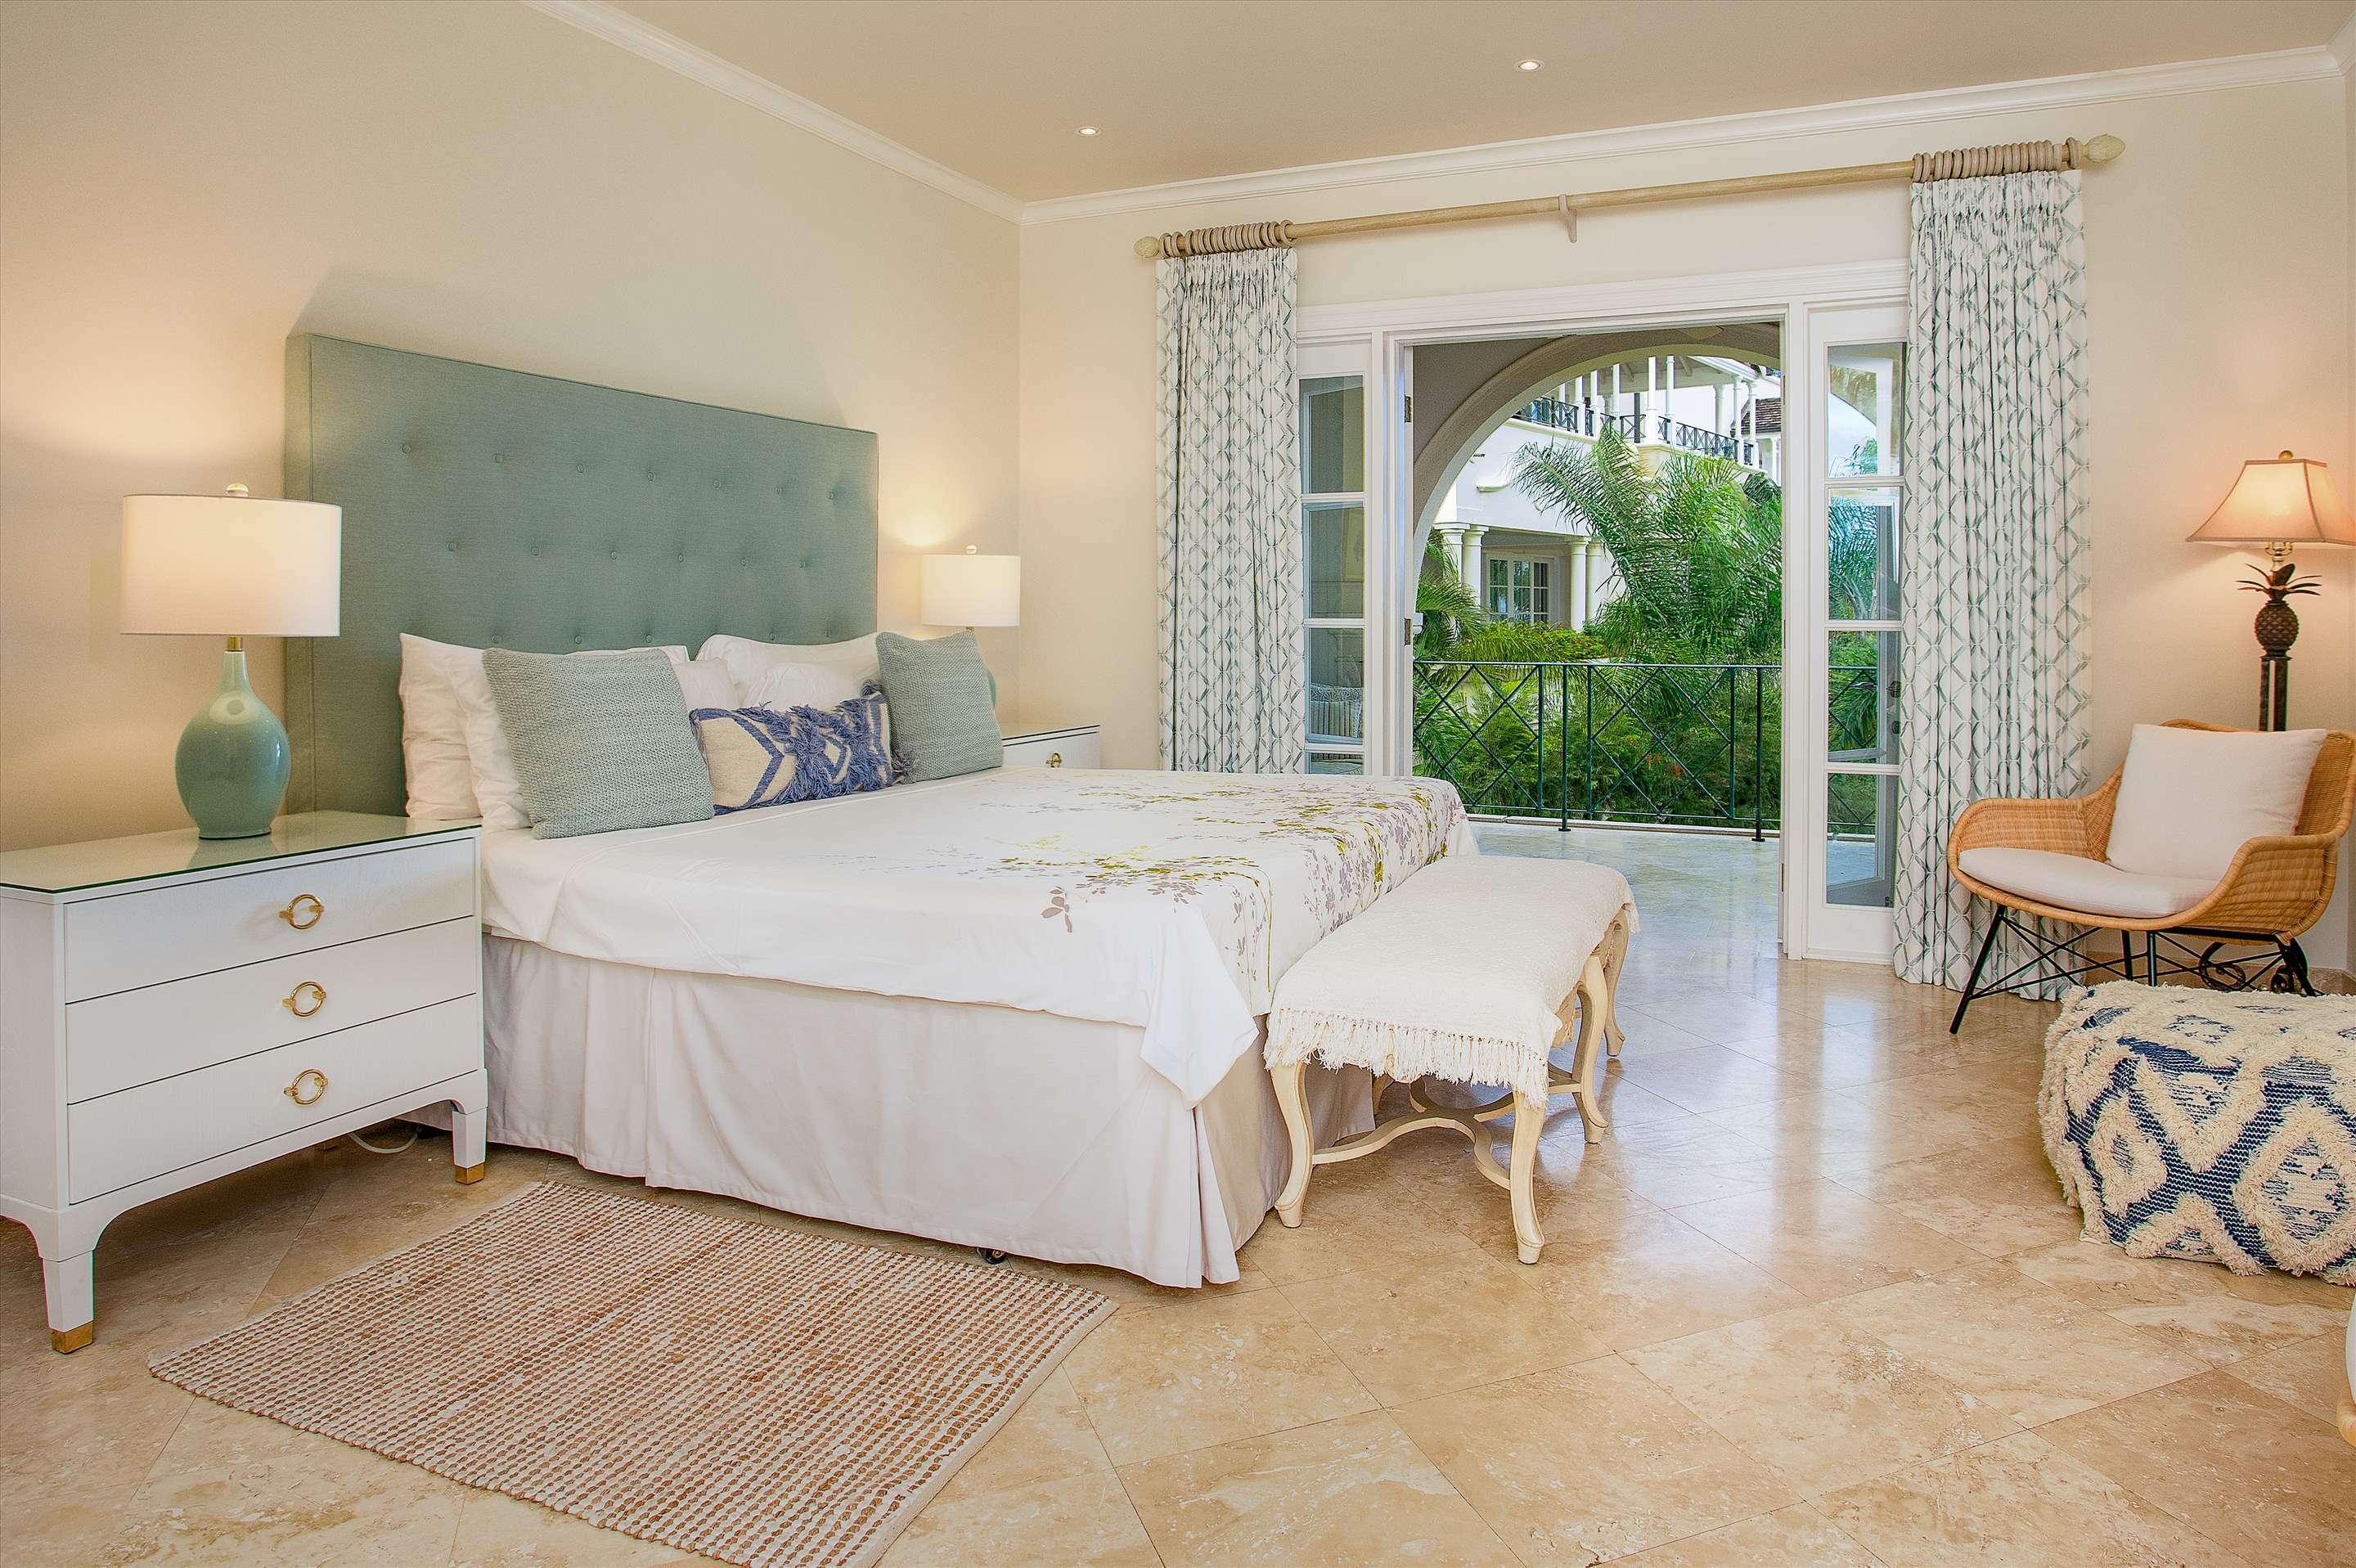 Schooner Bay 205, Three Bedroom rate, 3 bedroom apartment in St. James & West Coast, Barbados Photo #7